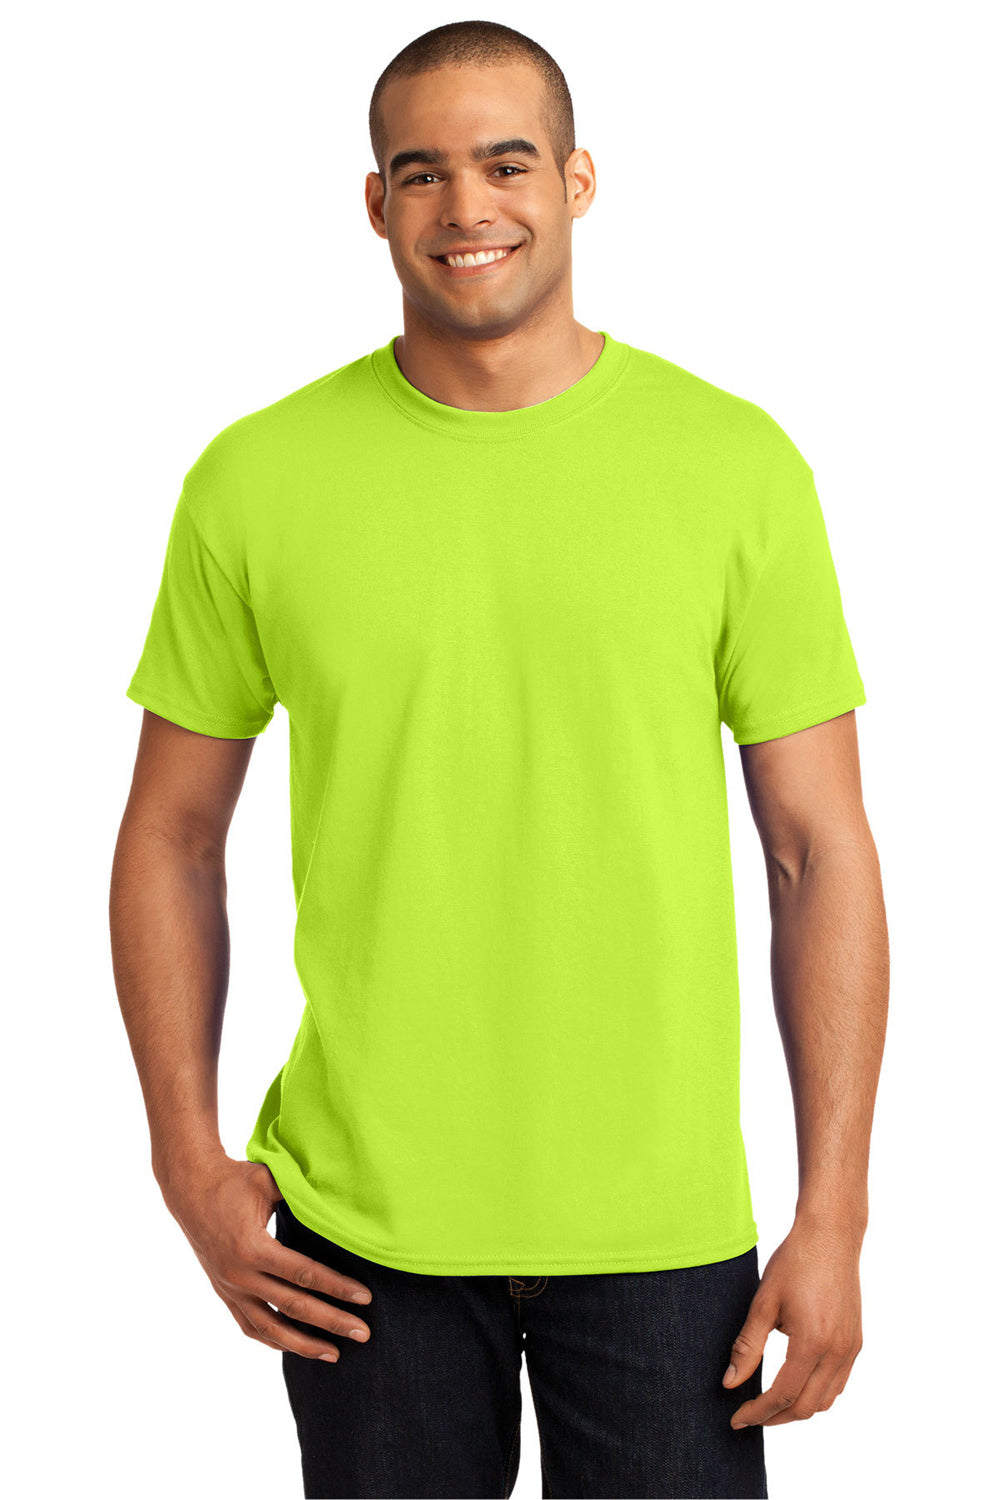 Hanes 5170 Mens EcoSmart Short Sleeve Crewneck T-Shirt Safety Green Front